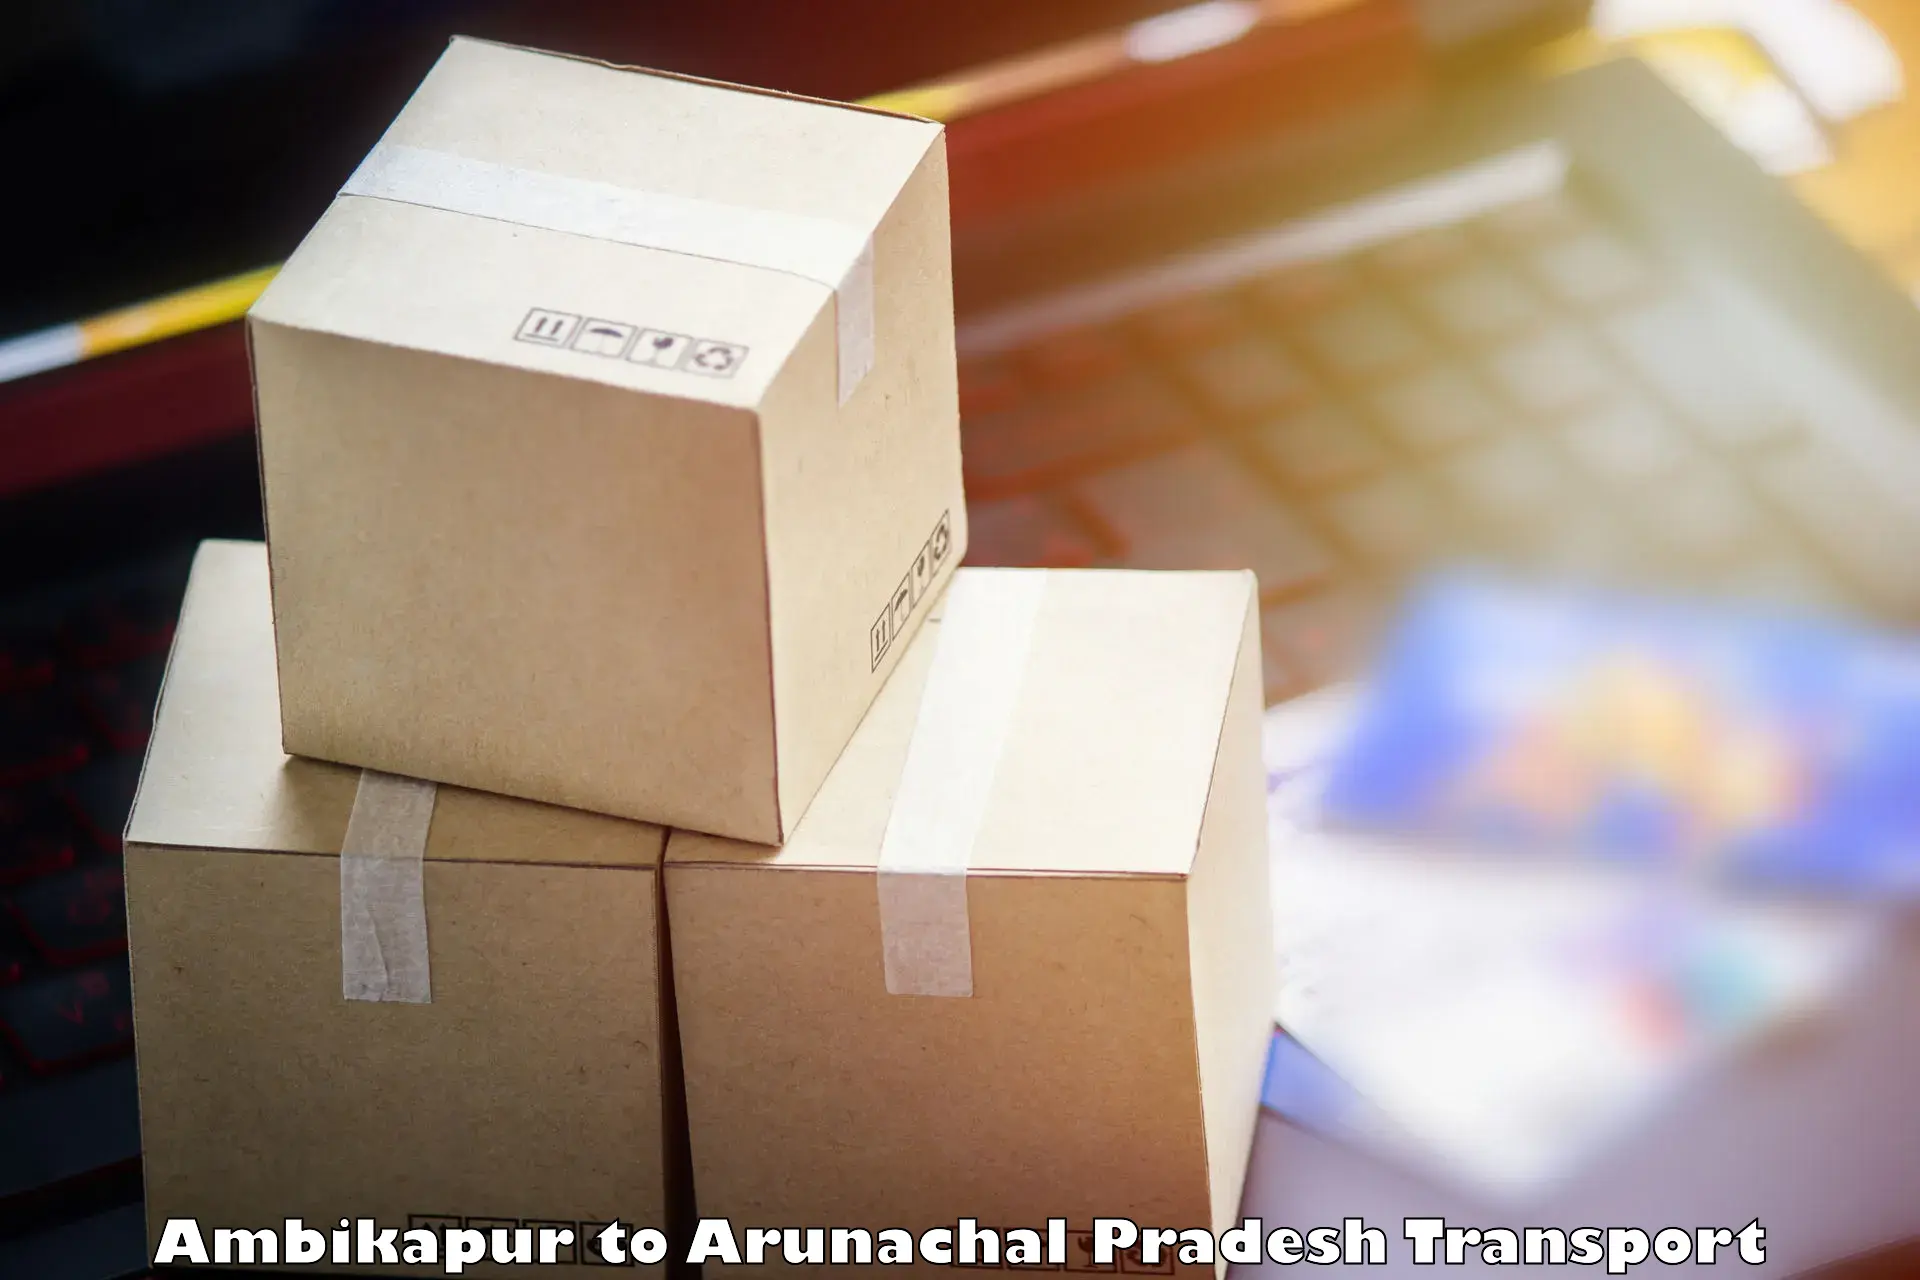 Pick up transport service Ambikapur to Arunachal Pradesh